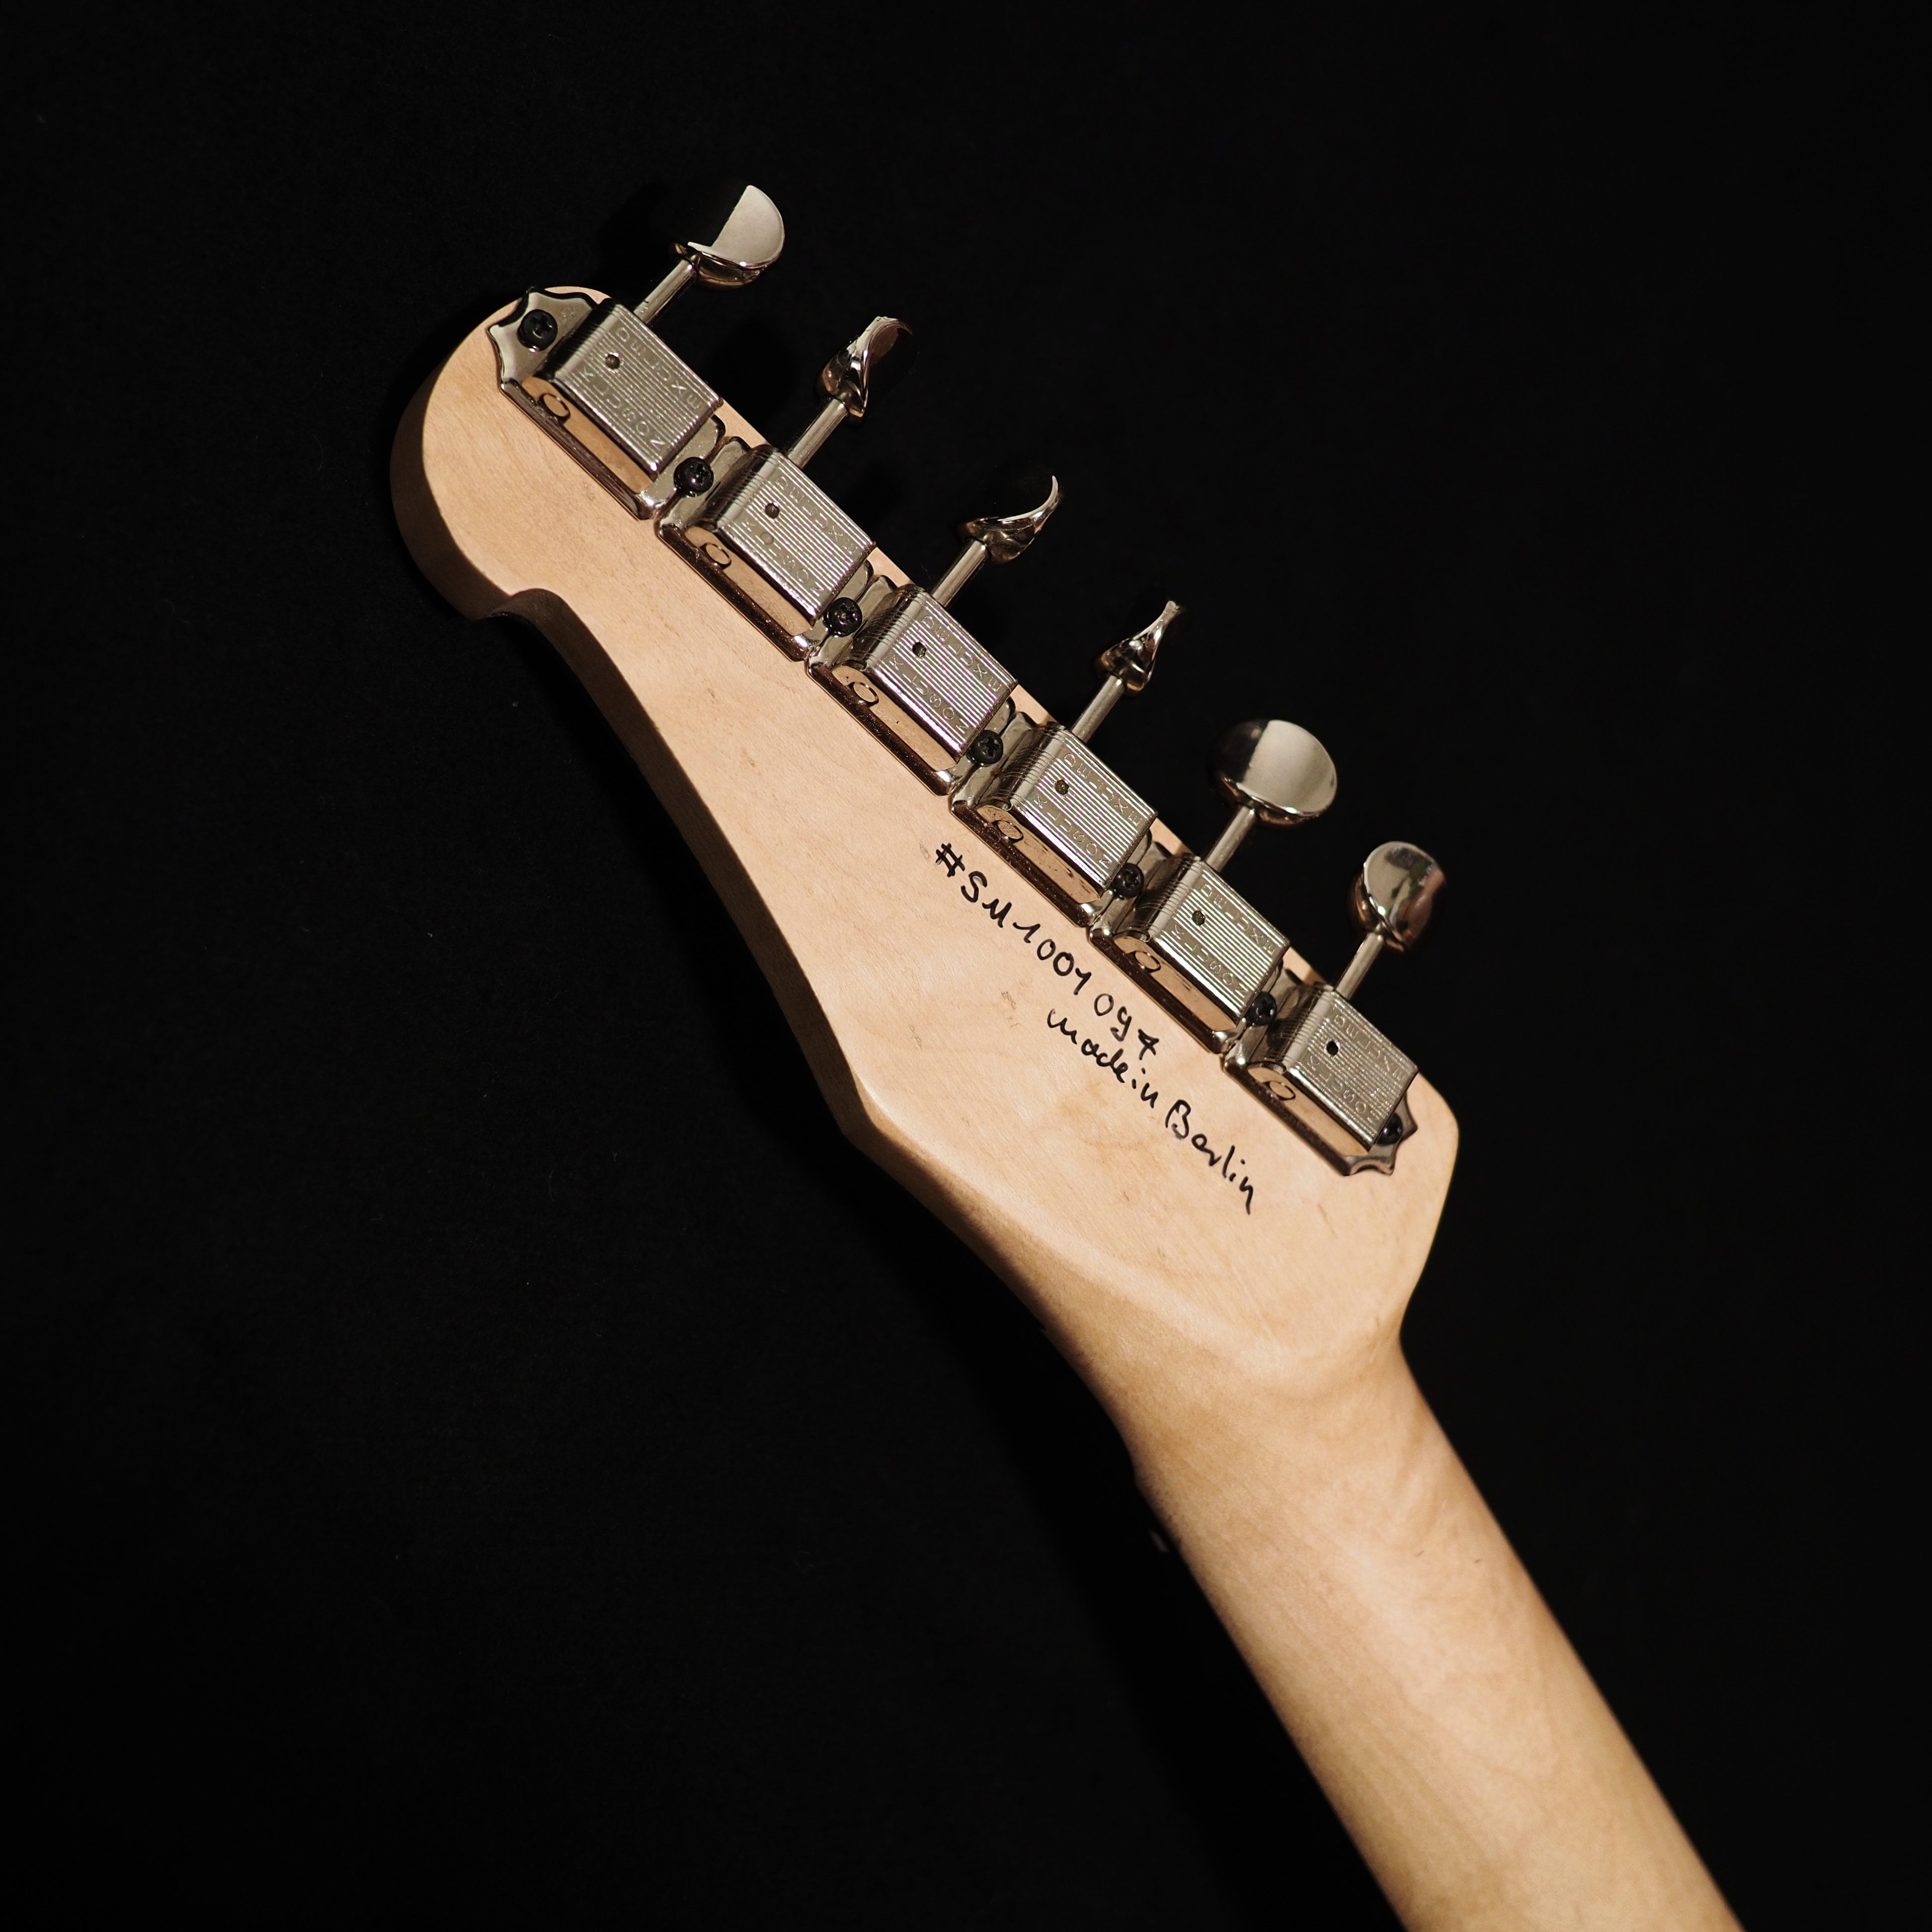 K'mo Korina Telecaster - Hand made in Berlin - wurst.guitars